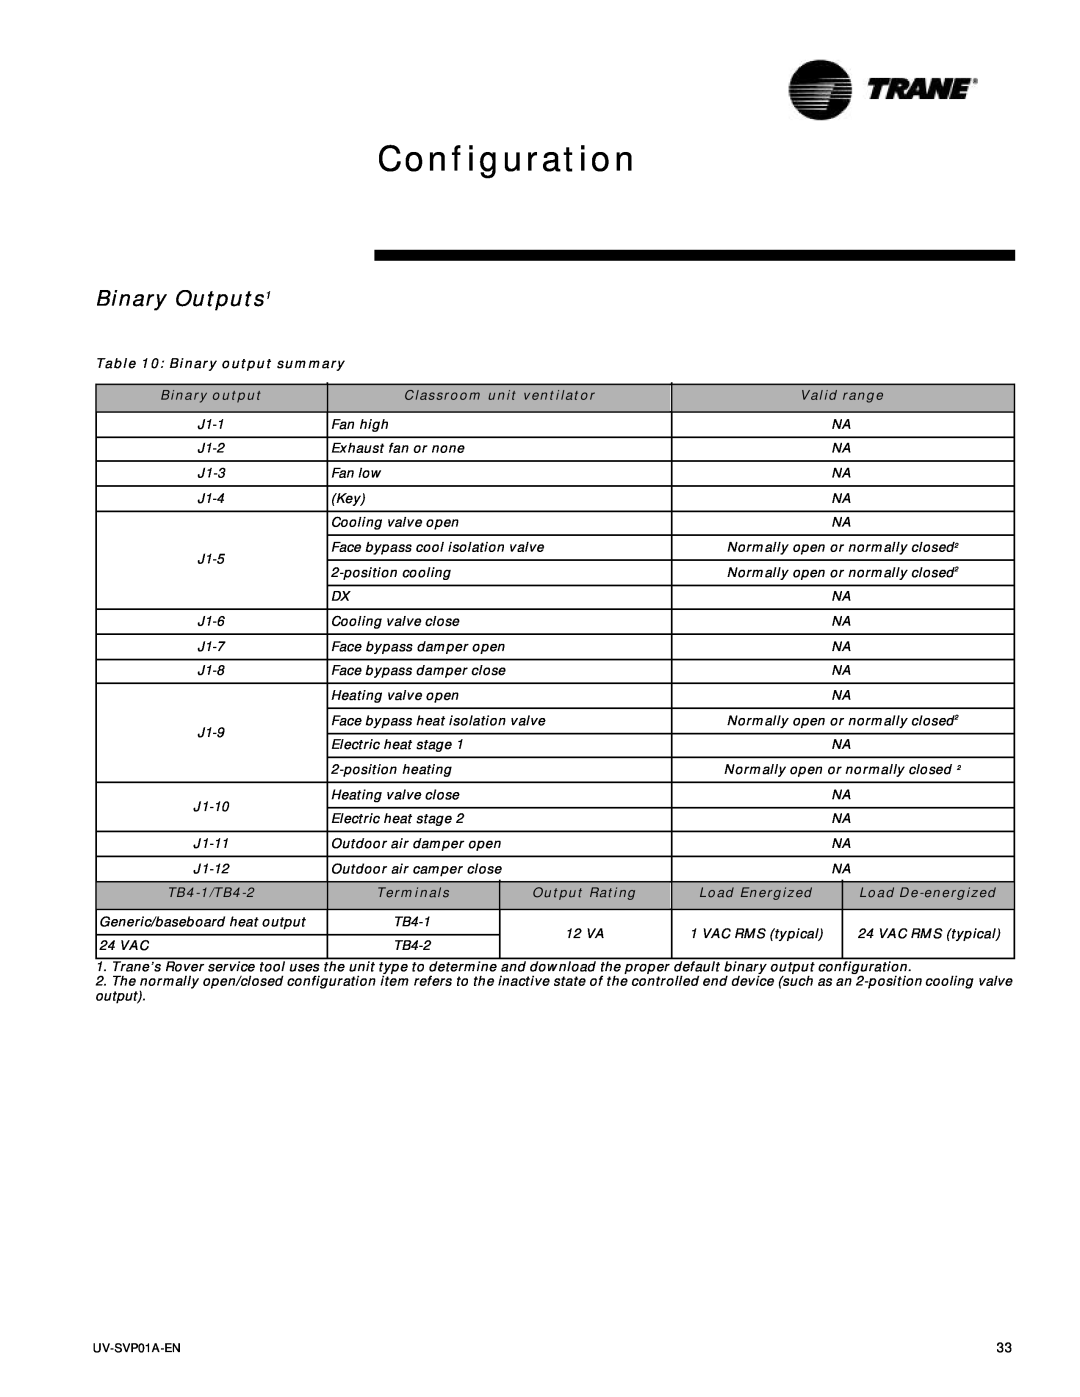 Trane ZN.520 manual Configuration, Binary output summary, TB4-1/TB4-2, Classroom unit ventilator, Terminals, Output Rating 